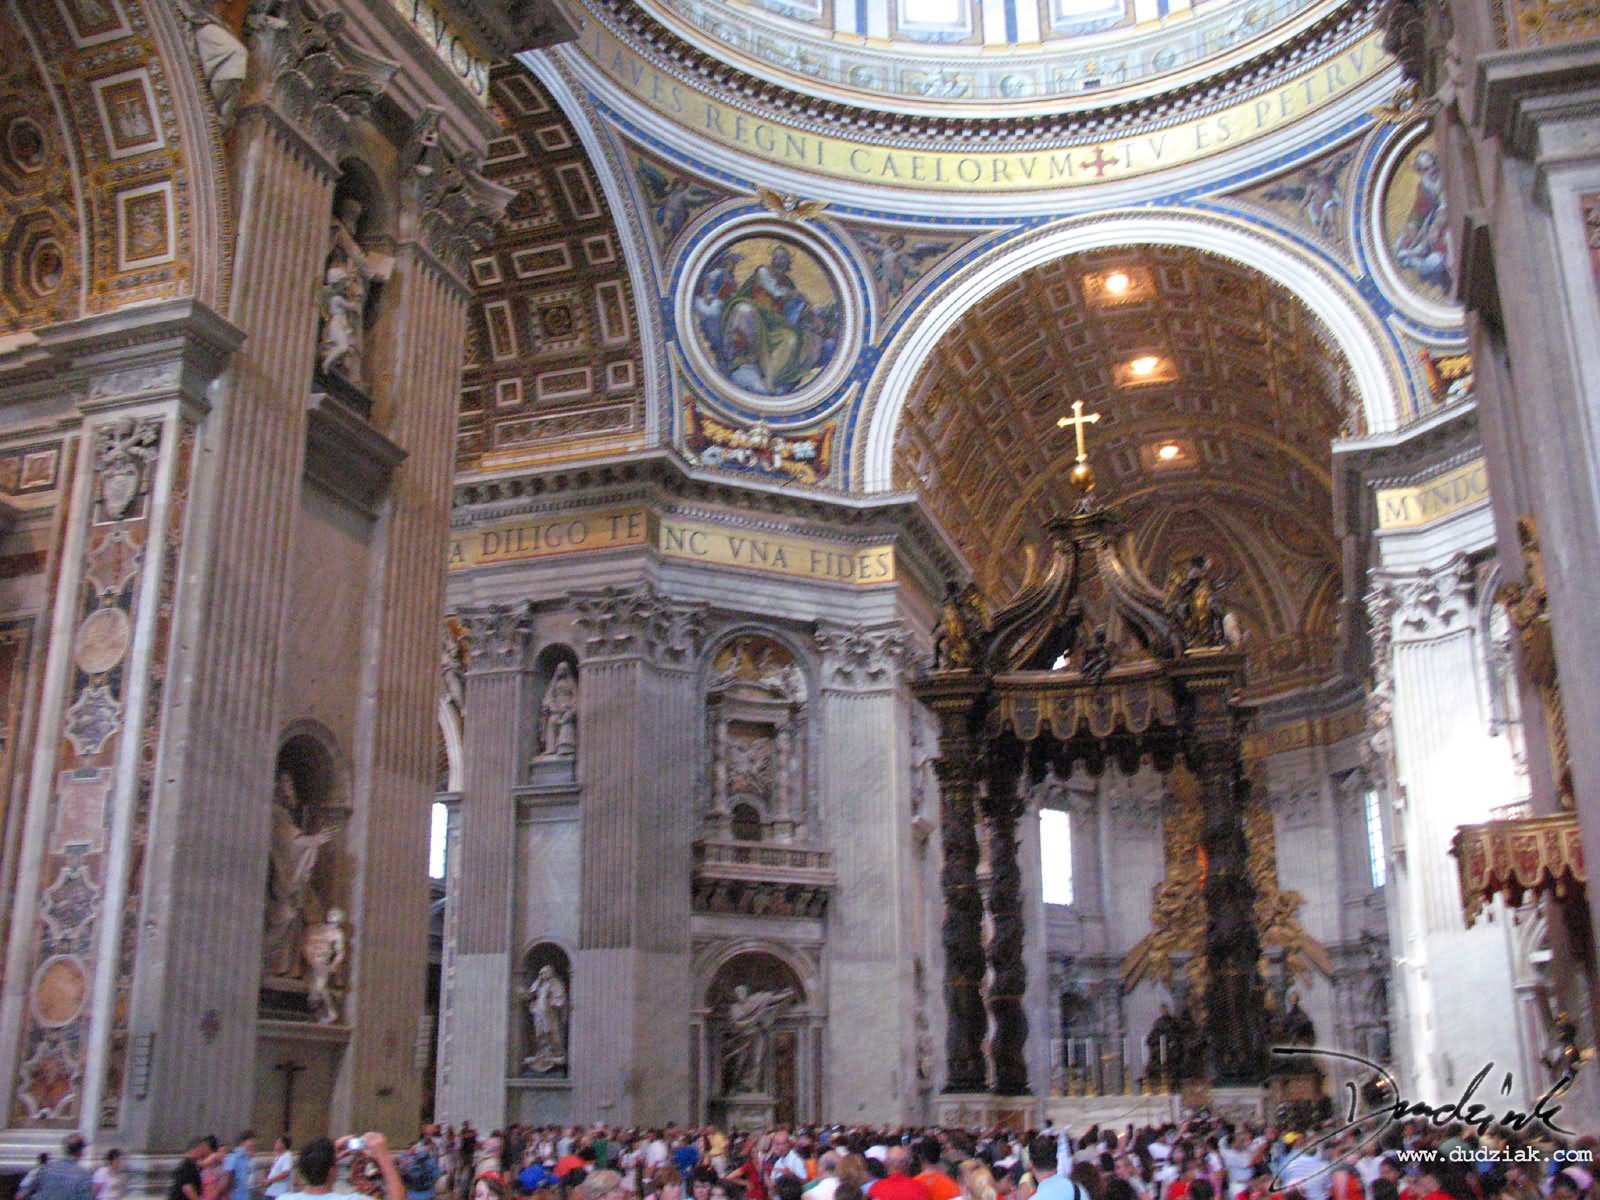 Inside St. Peter's Basilica, Vatican City